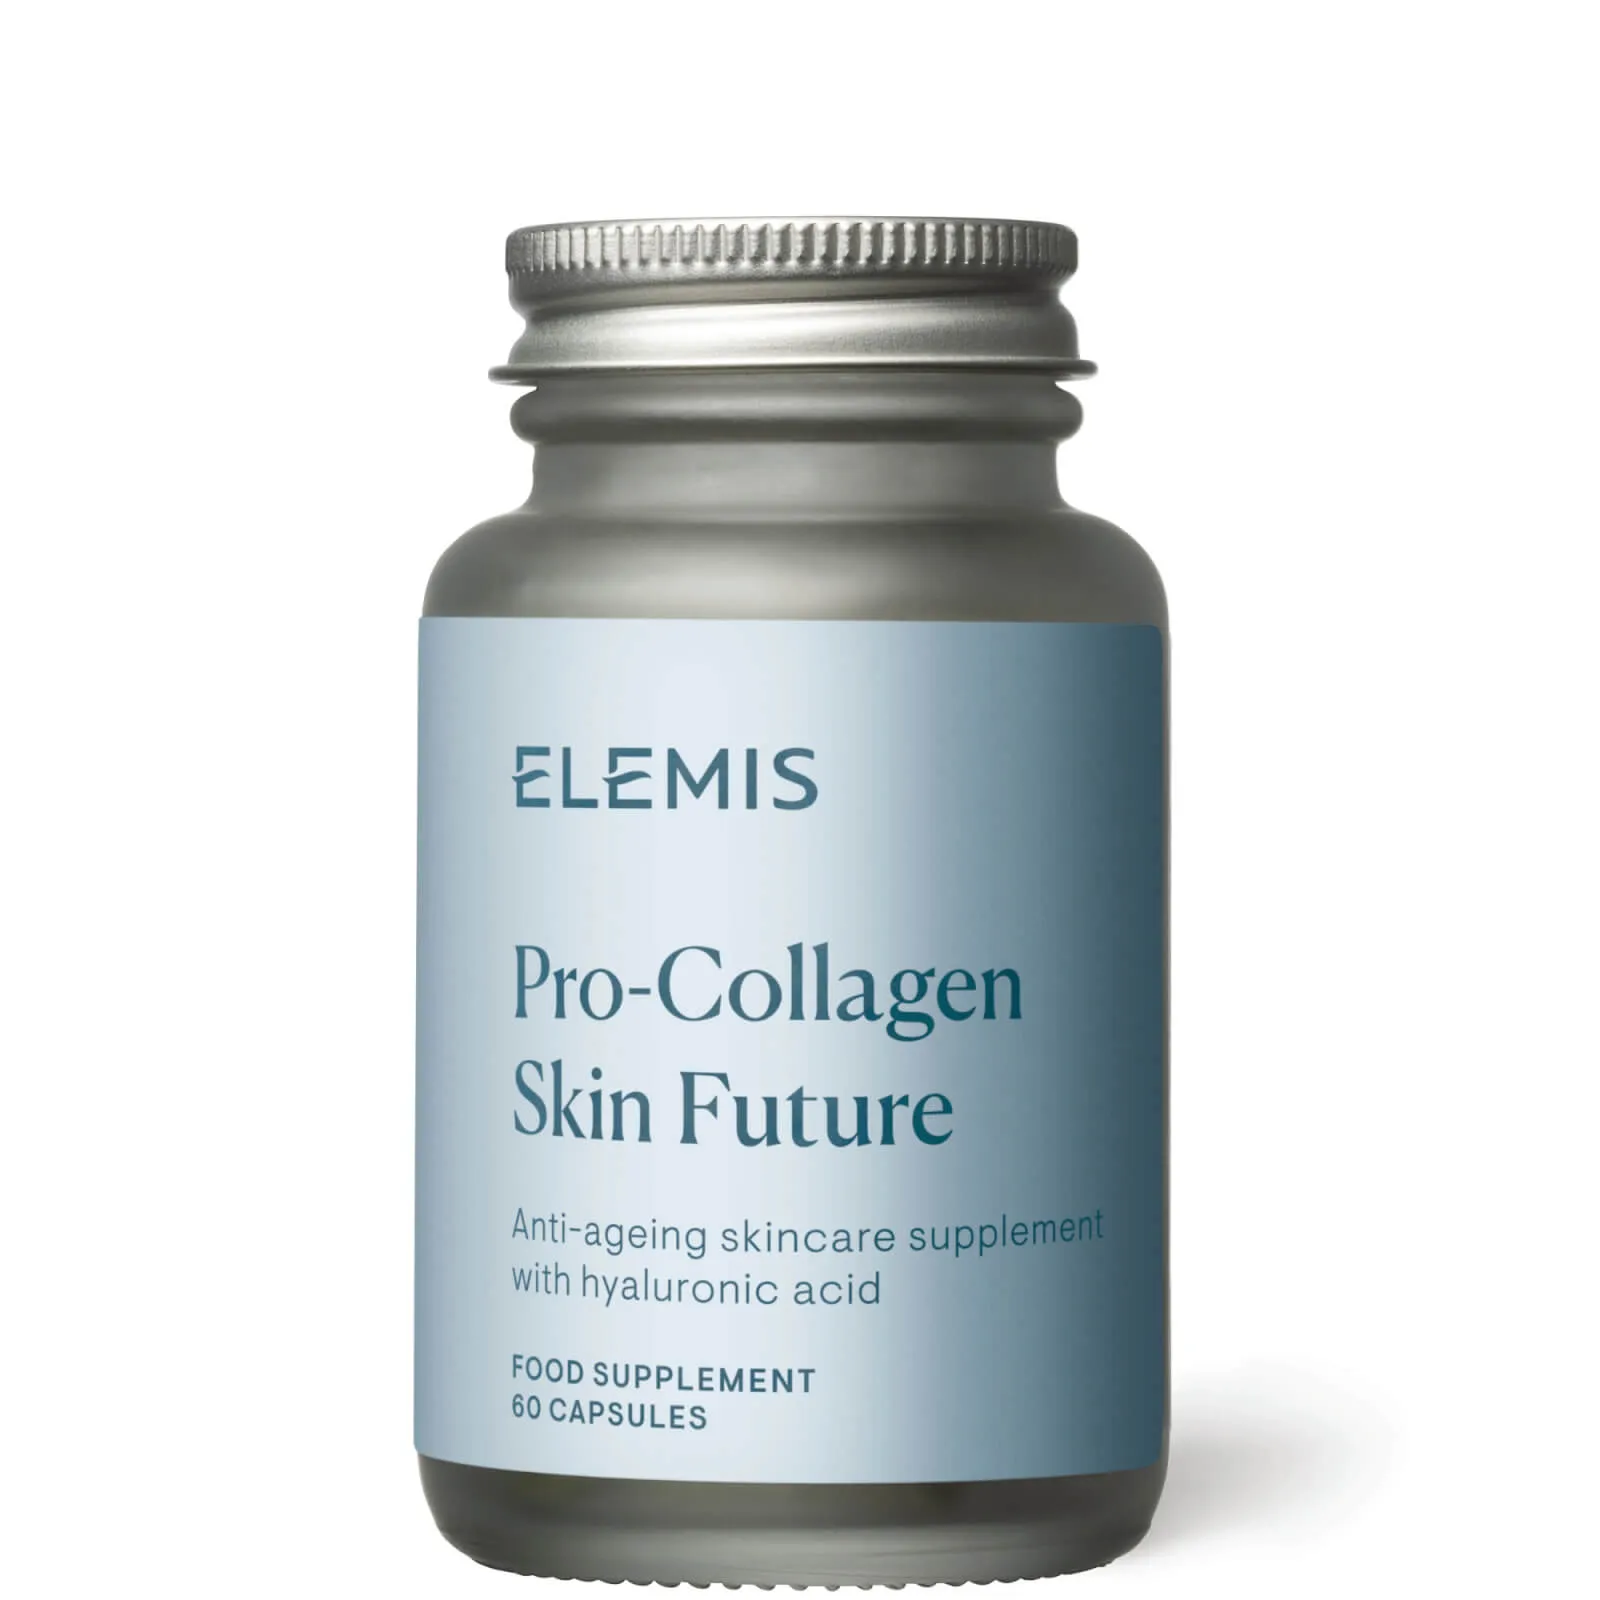  Pro-Collagen Skin Future Supplements 60 Capsules